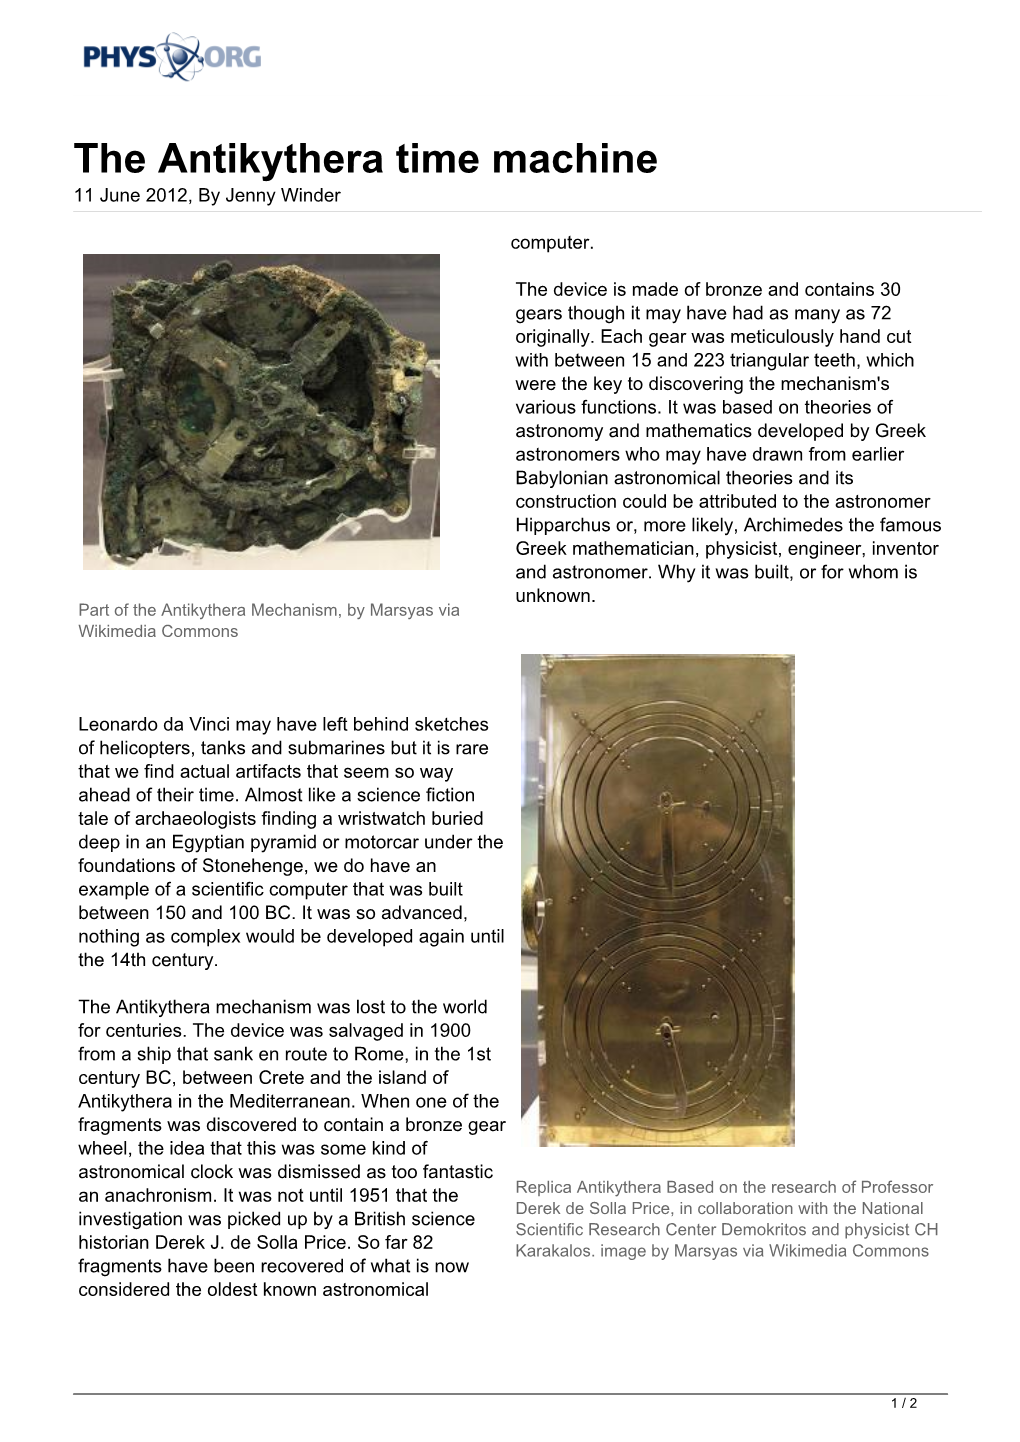 The Antikythera Time Machine 11 June 2012, by Jenny Winder